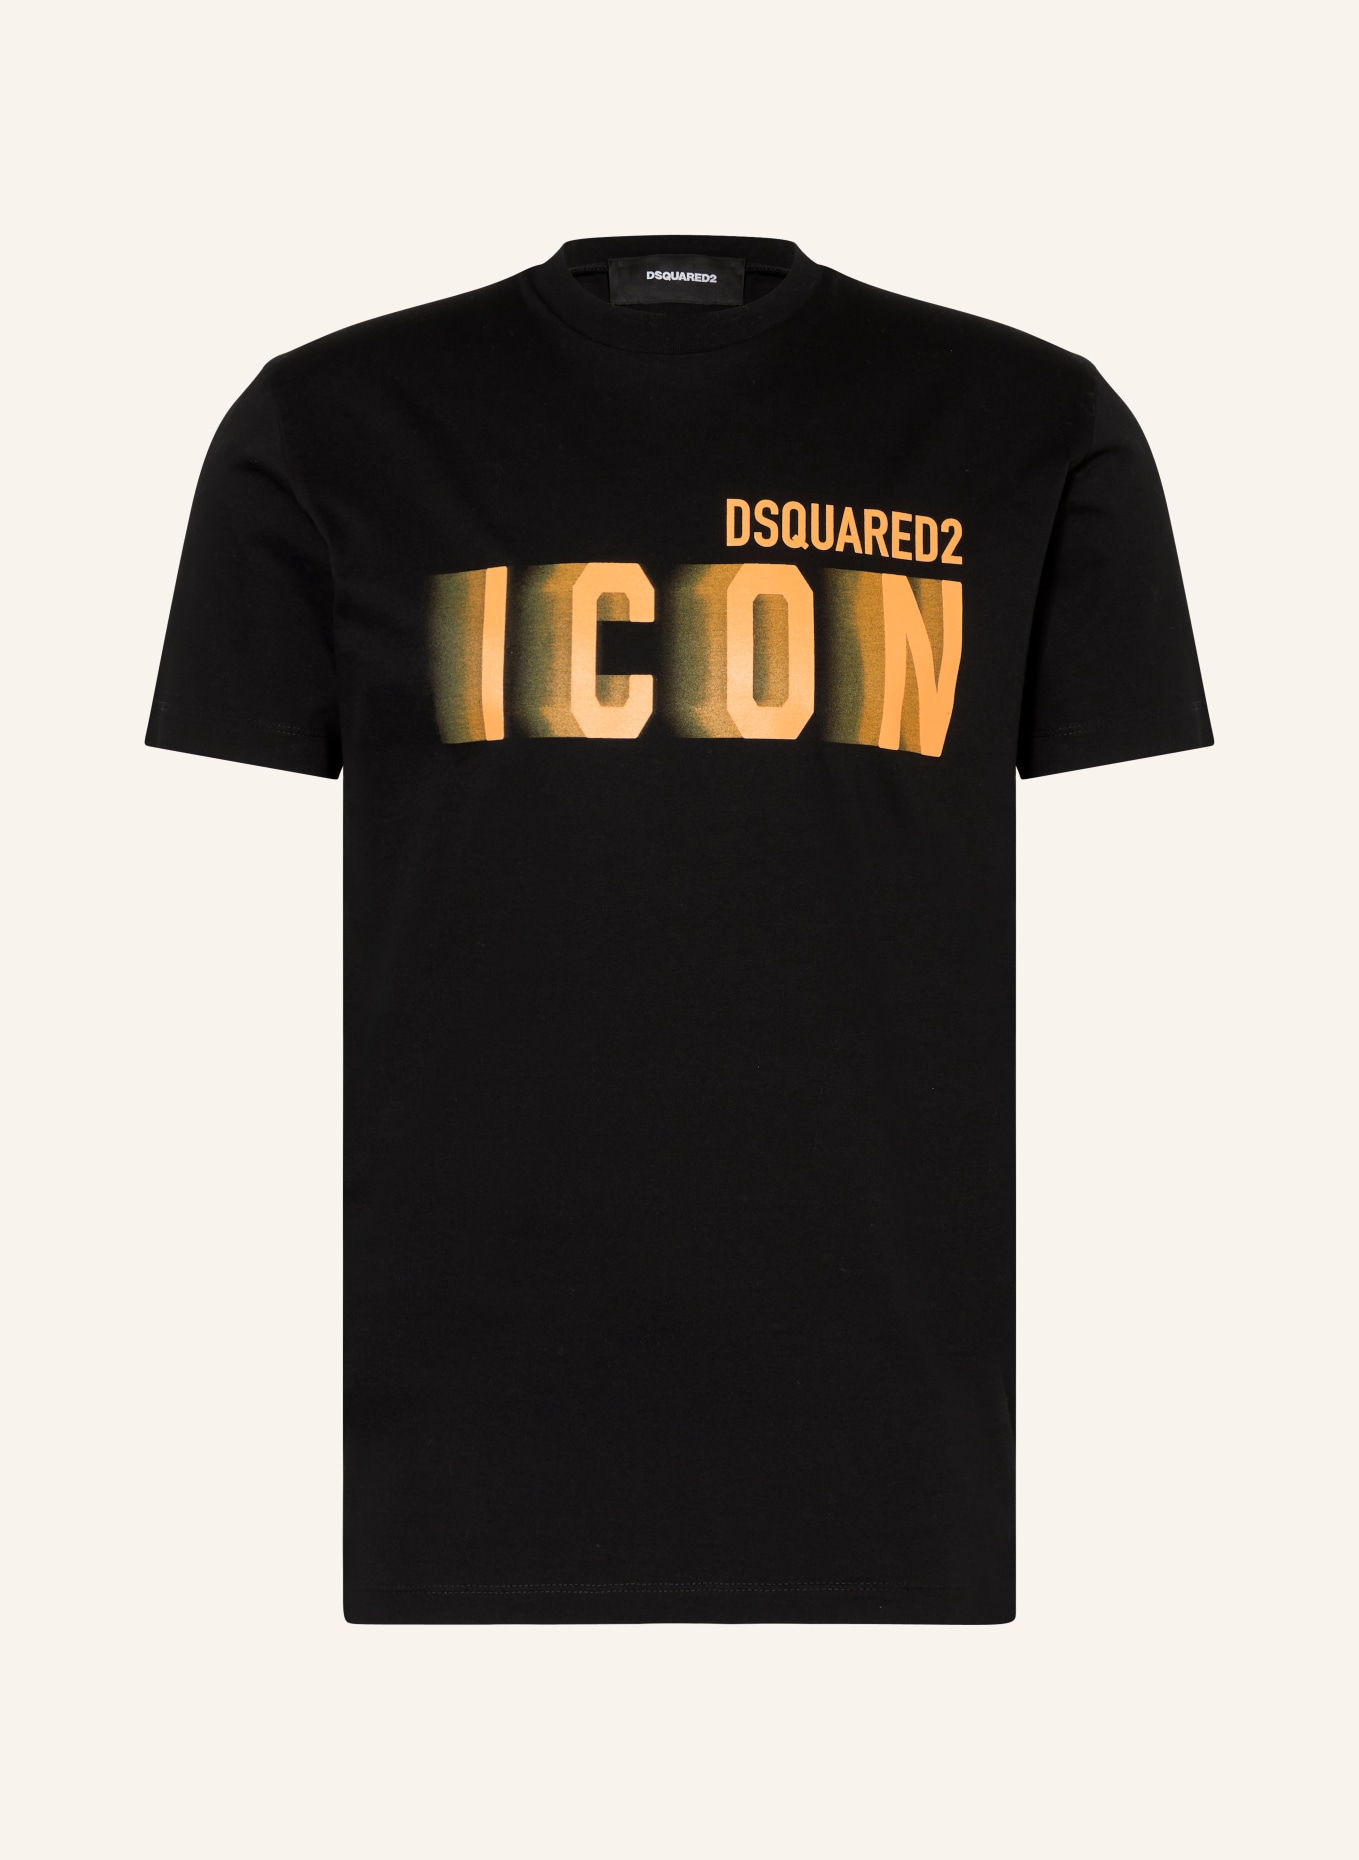 DSQUARED2 T-Shirt ICON, Farbe: SCHWARZ/ ORANGE (Bild 1)